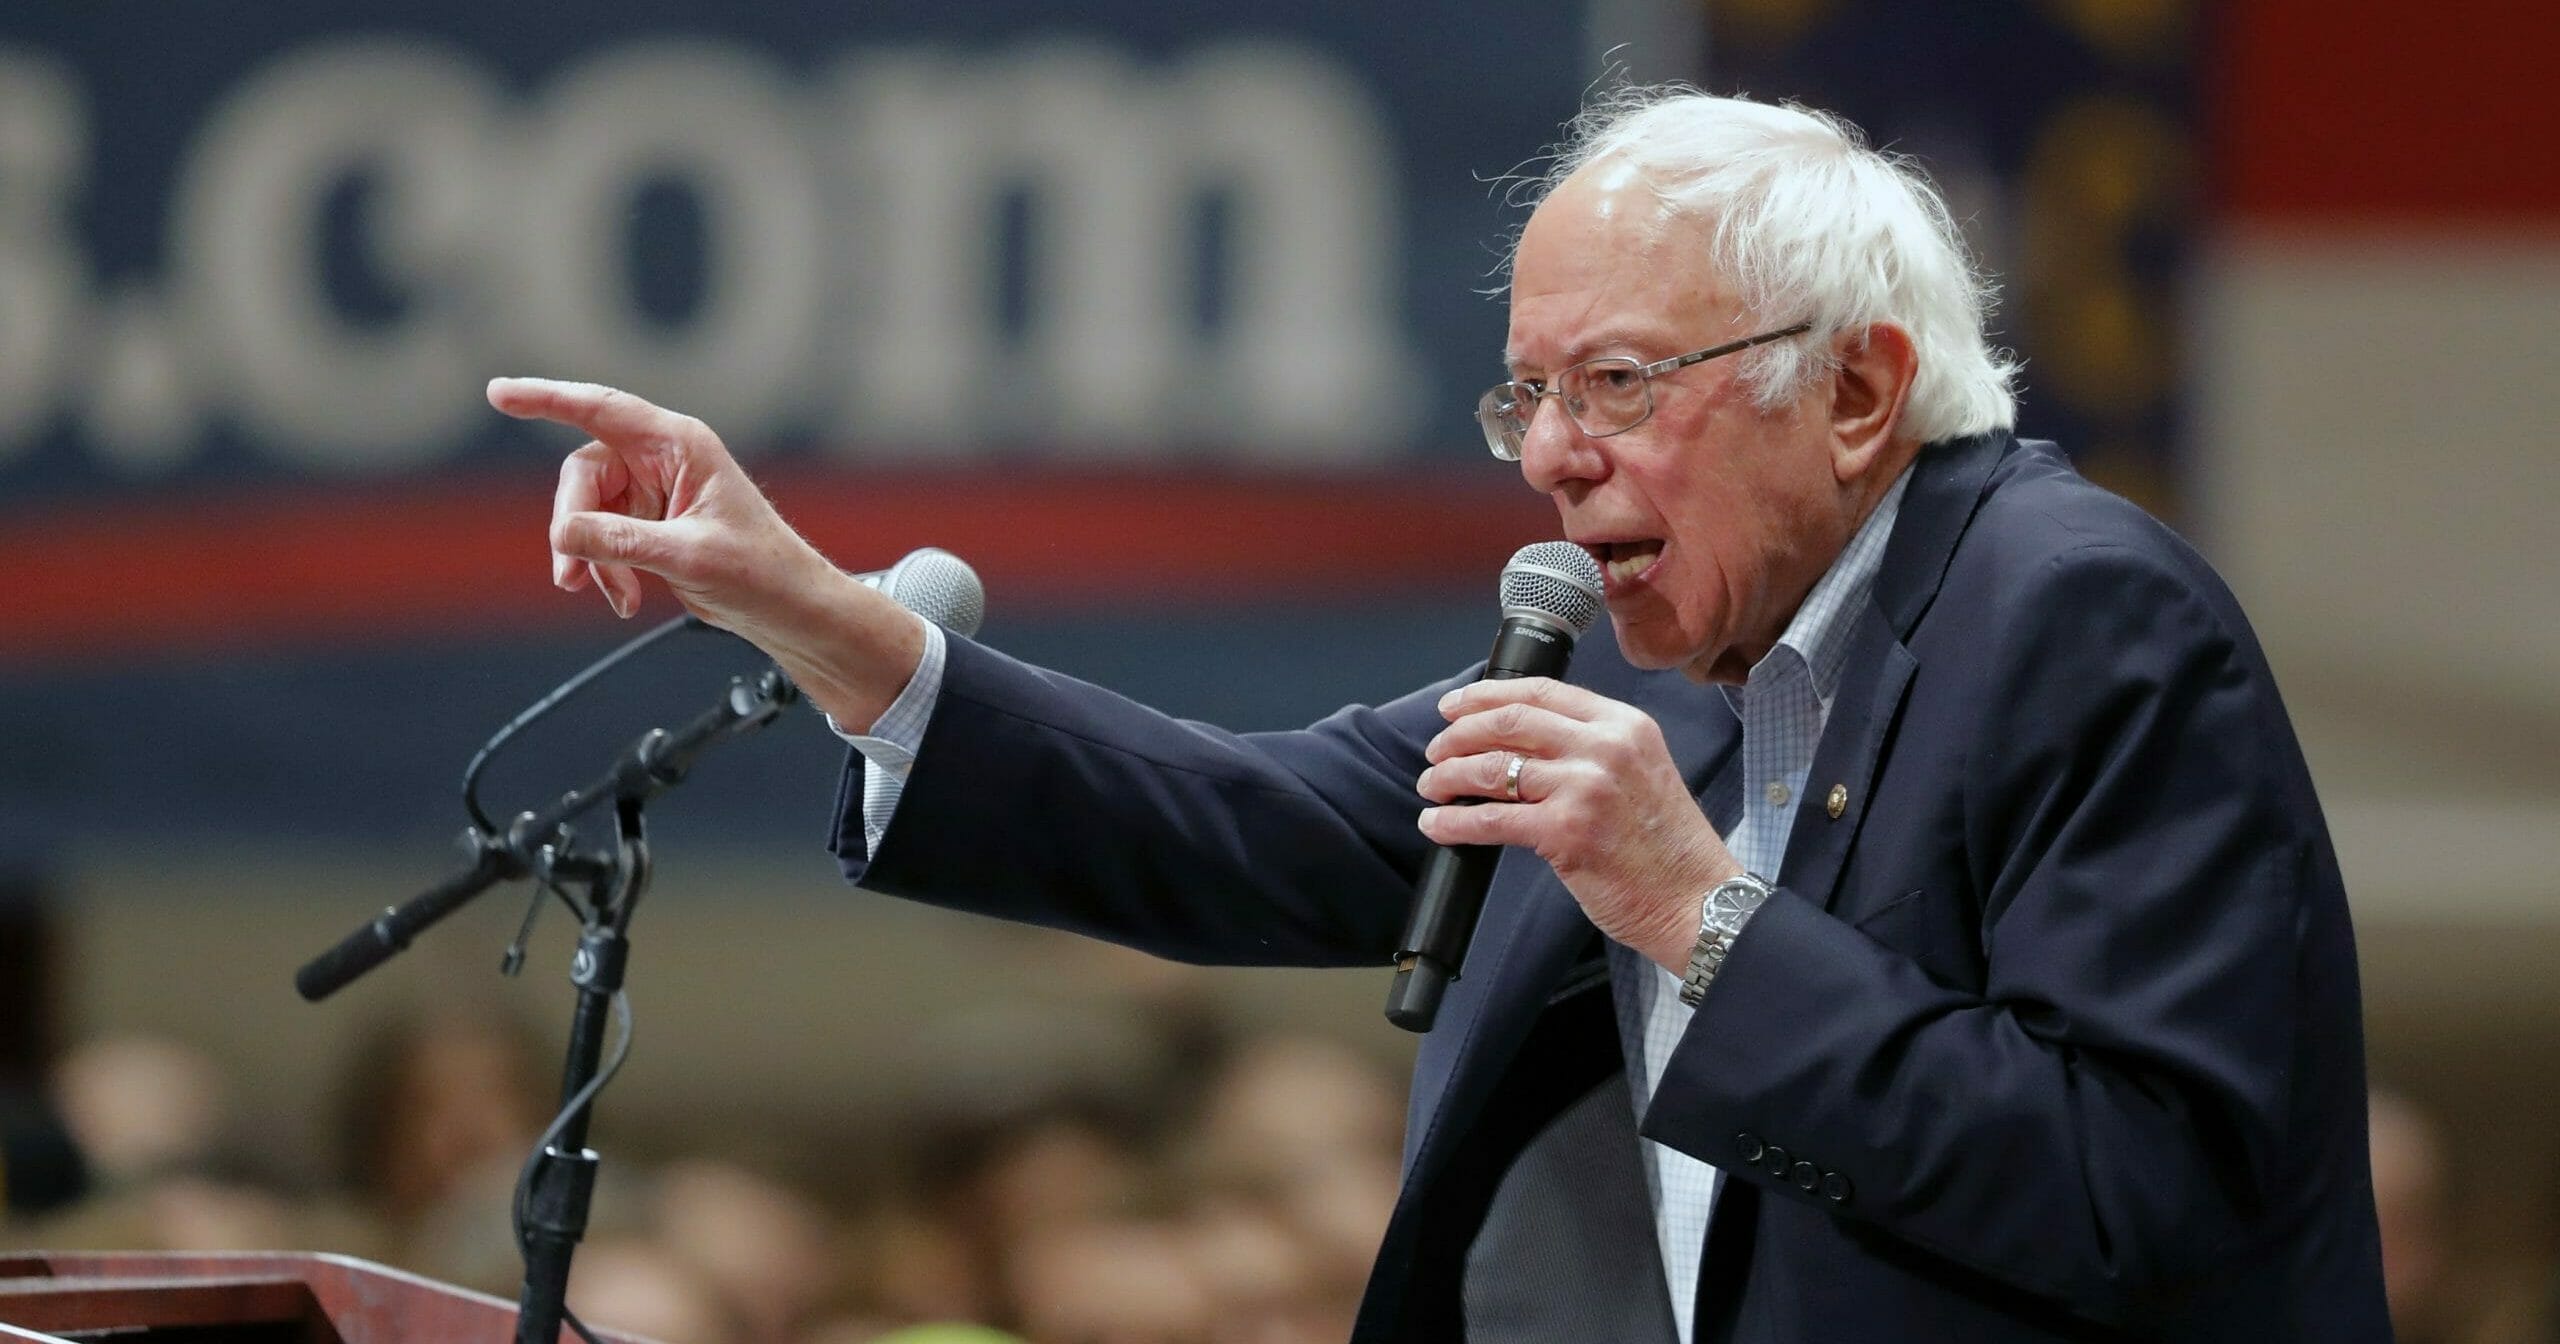 Democratic presidential candidate Sen. Bernie Sanders speaks at a campaign event in Durham, North Carolina, on Feb. 14, 2020.